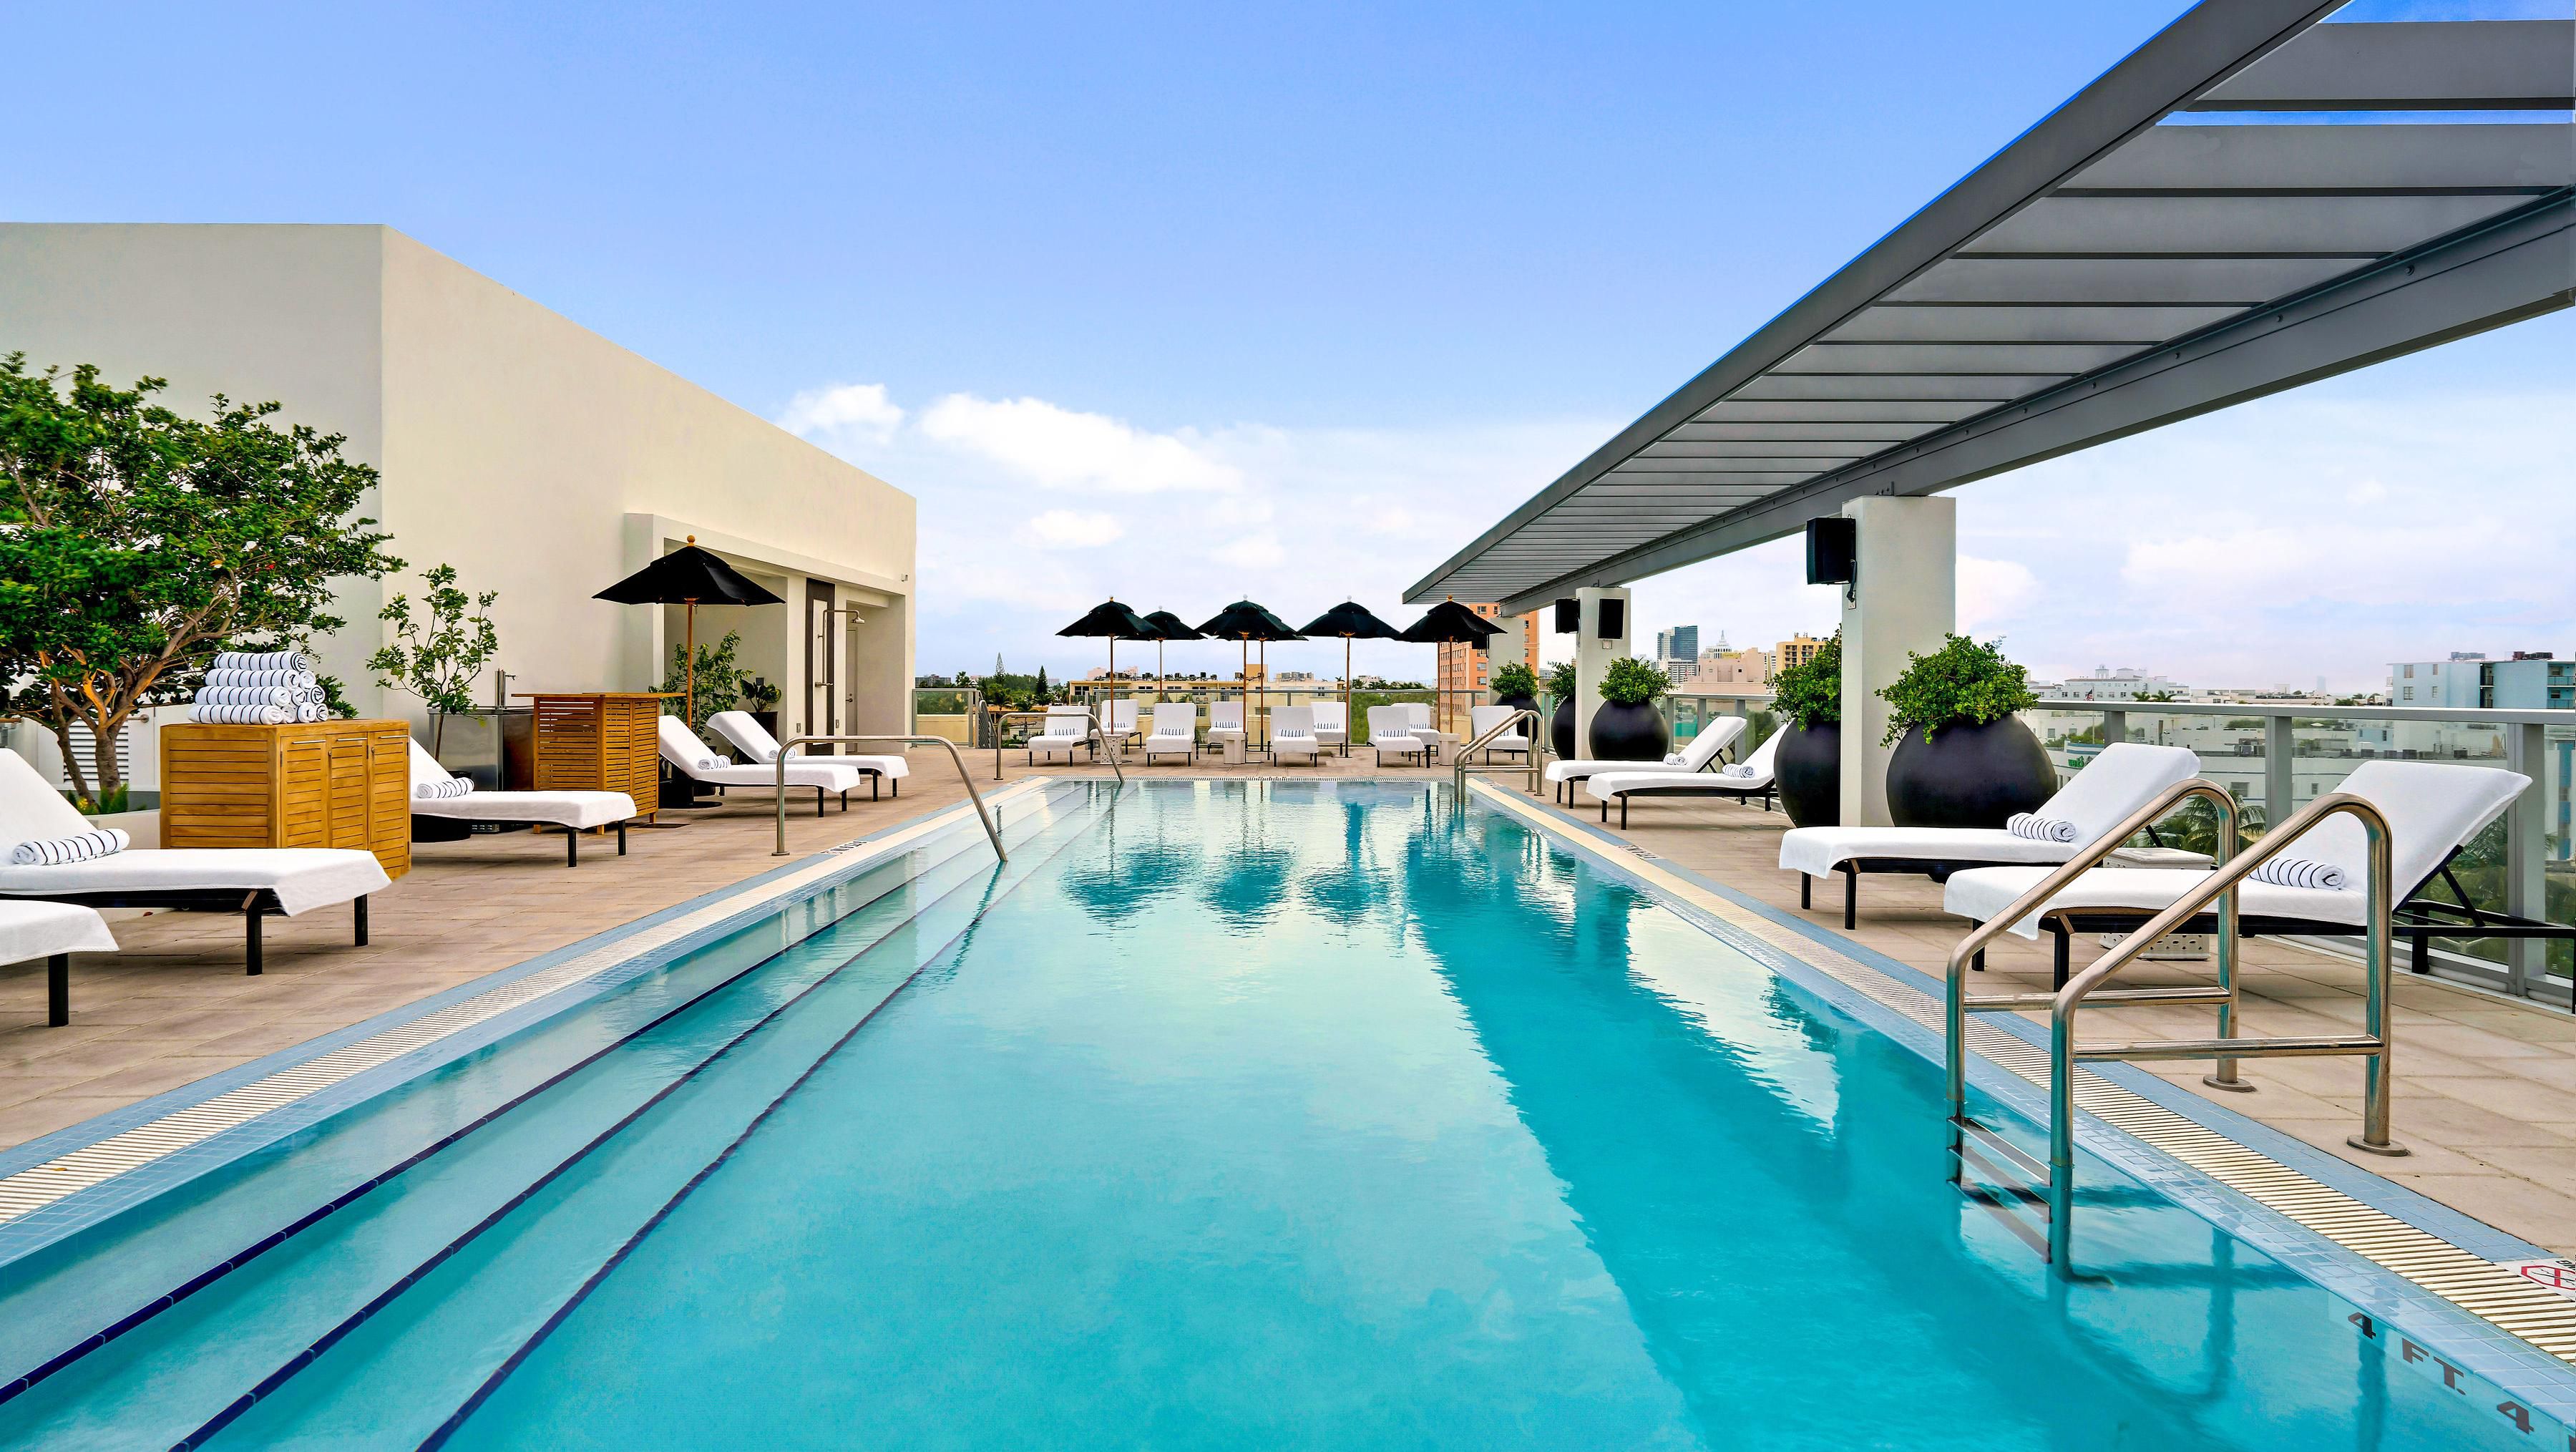 Kimpton Angler's Hotel in Miami Beach | Kimpton Hotels